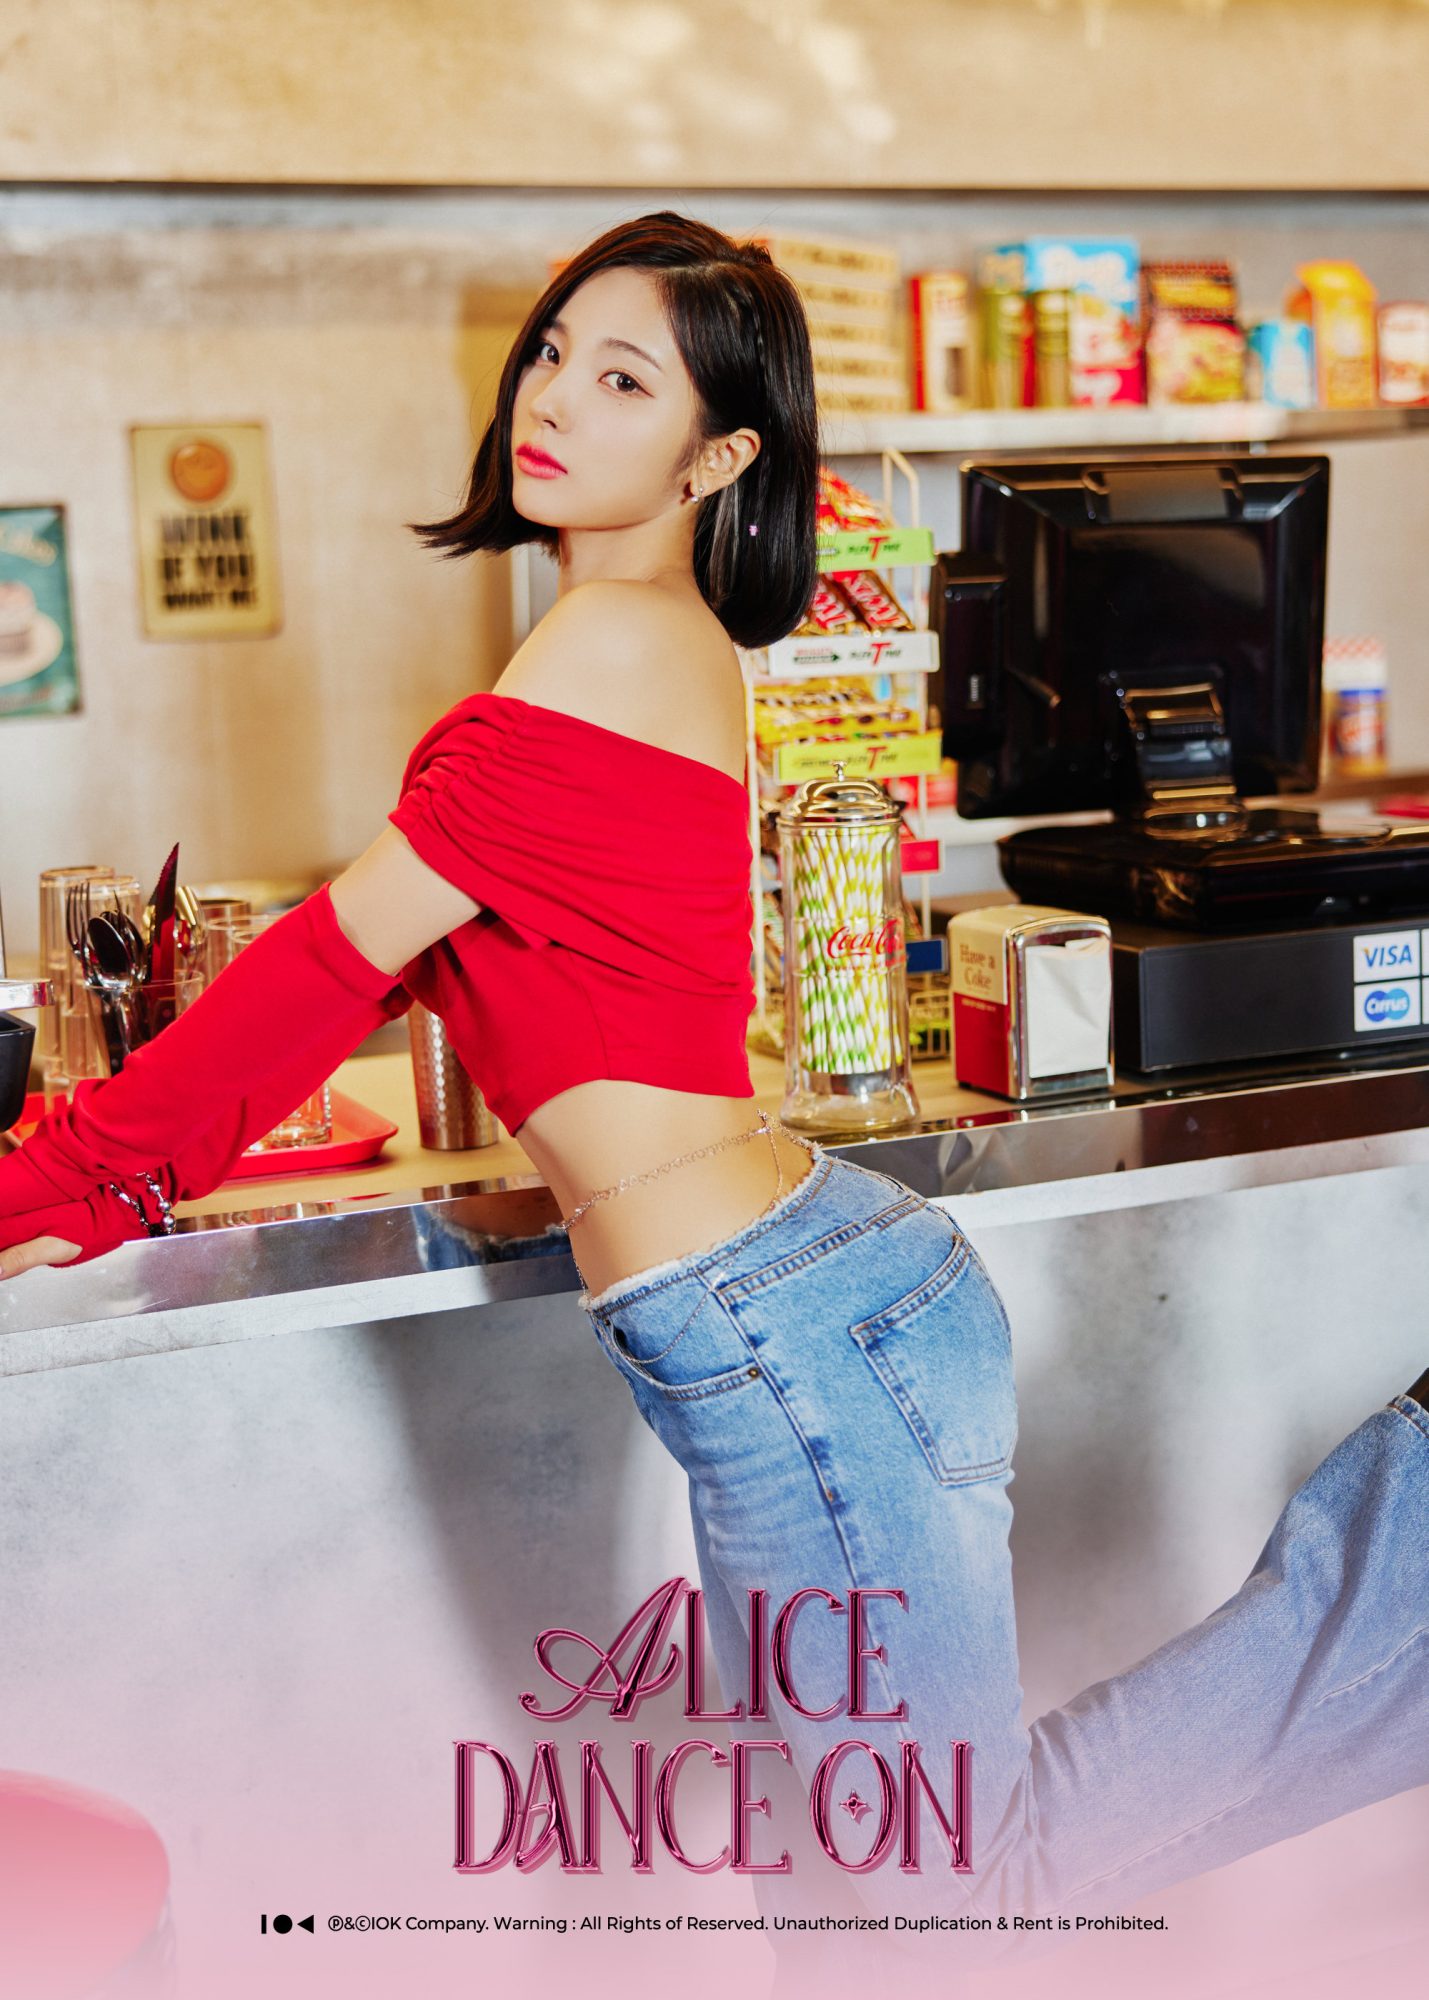 ALICE Sohee Dance On Teaser